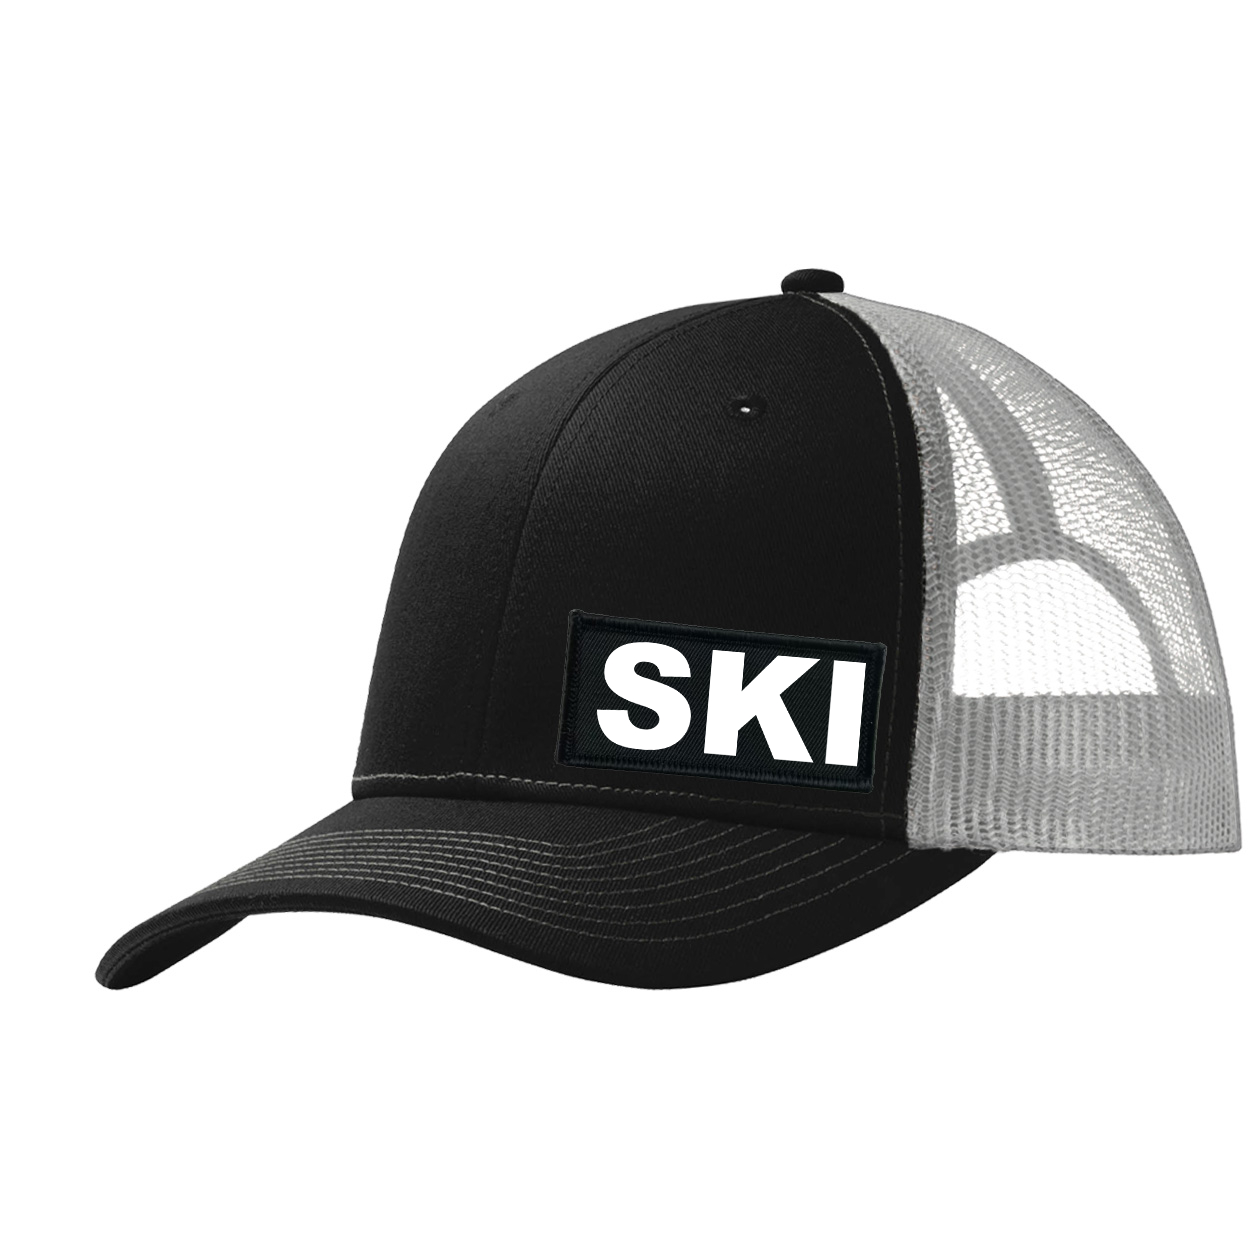 Ski Brand Logo Night Out Woven Patch Snapback Trucker Hat Black/Gray 